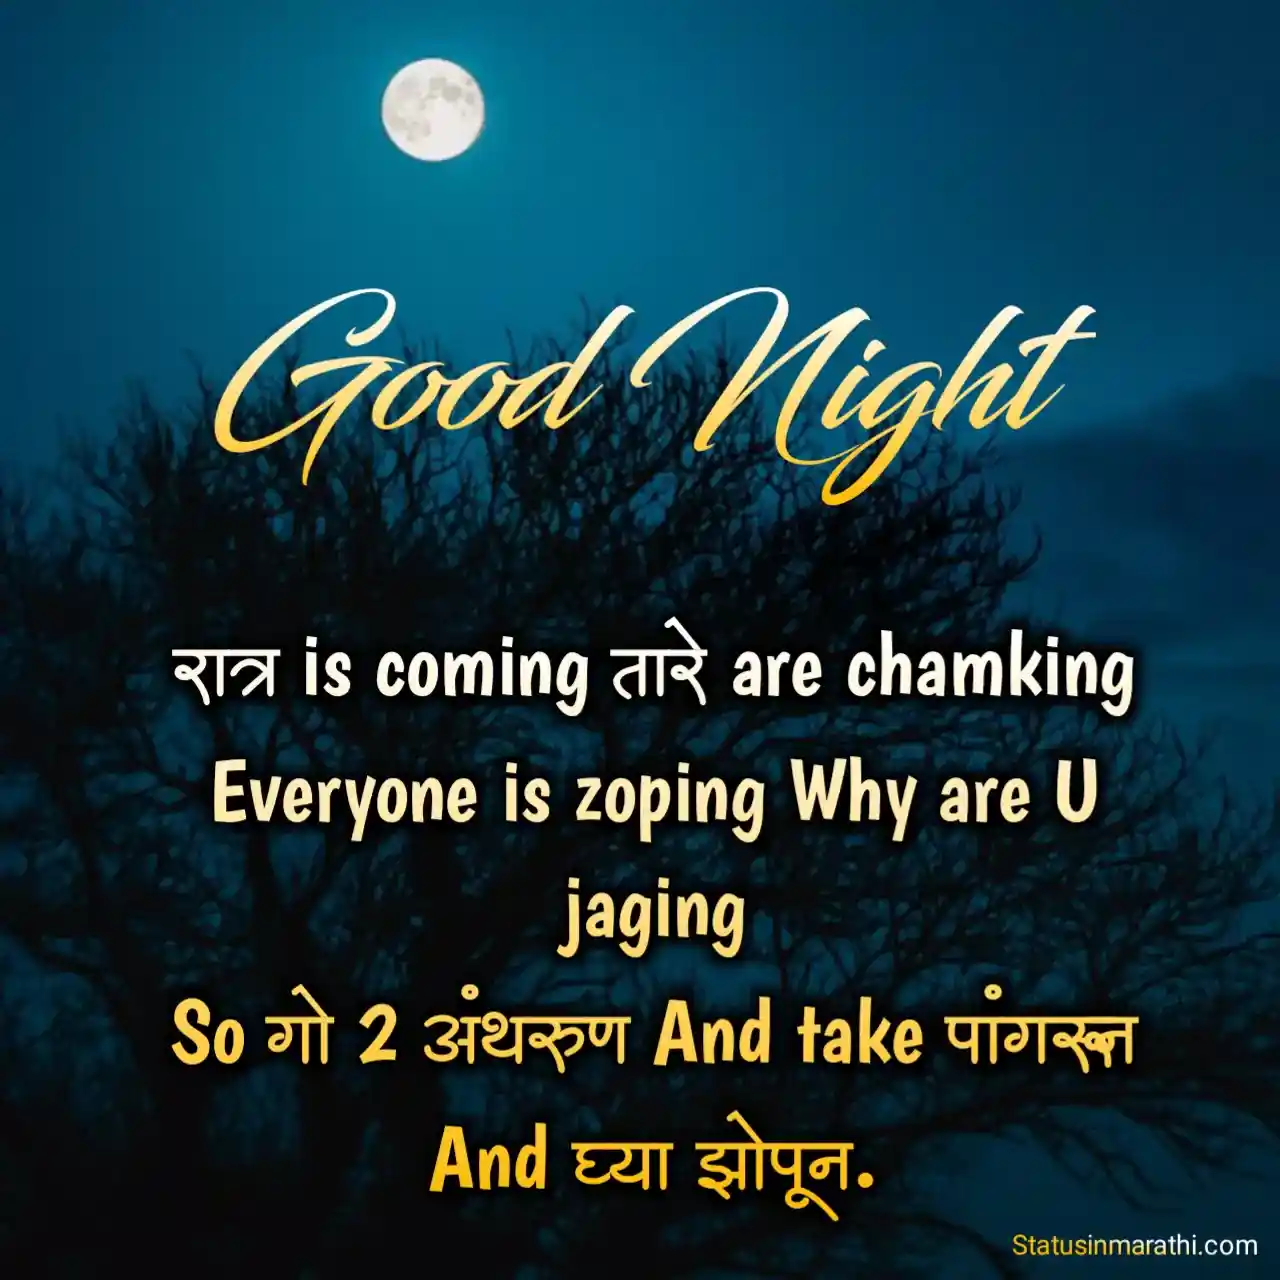 Good night status in marathi